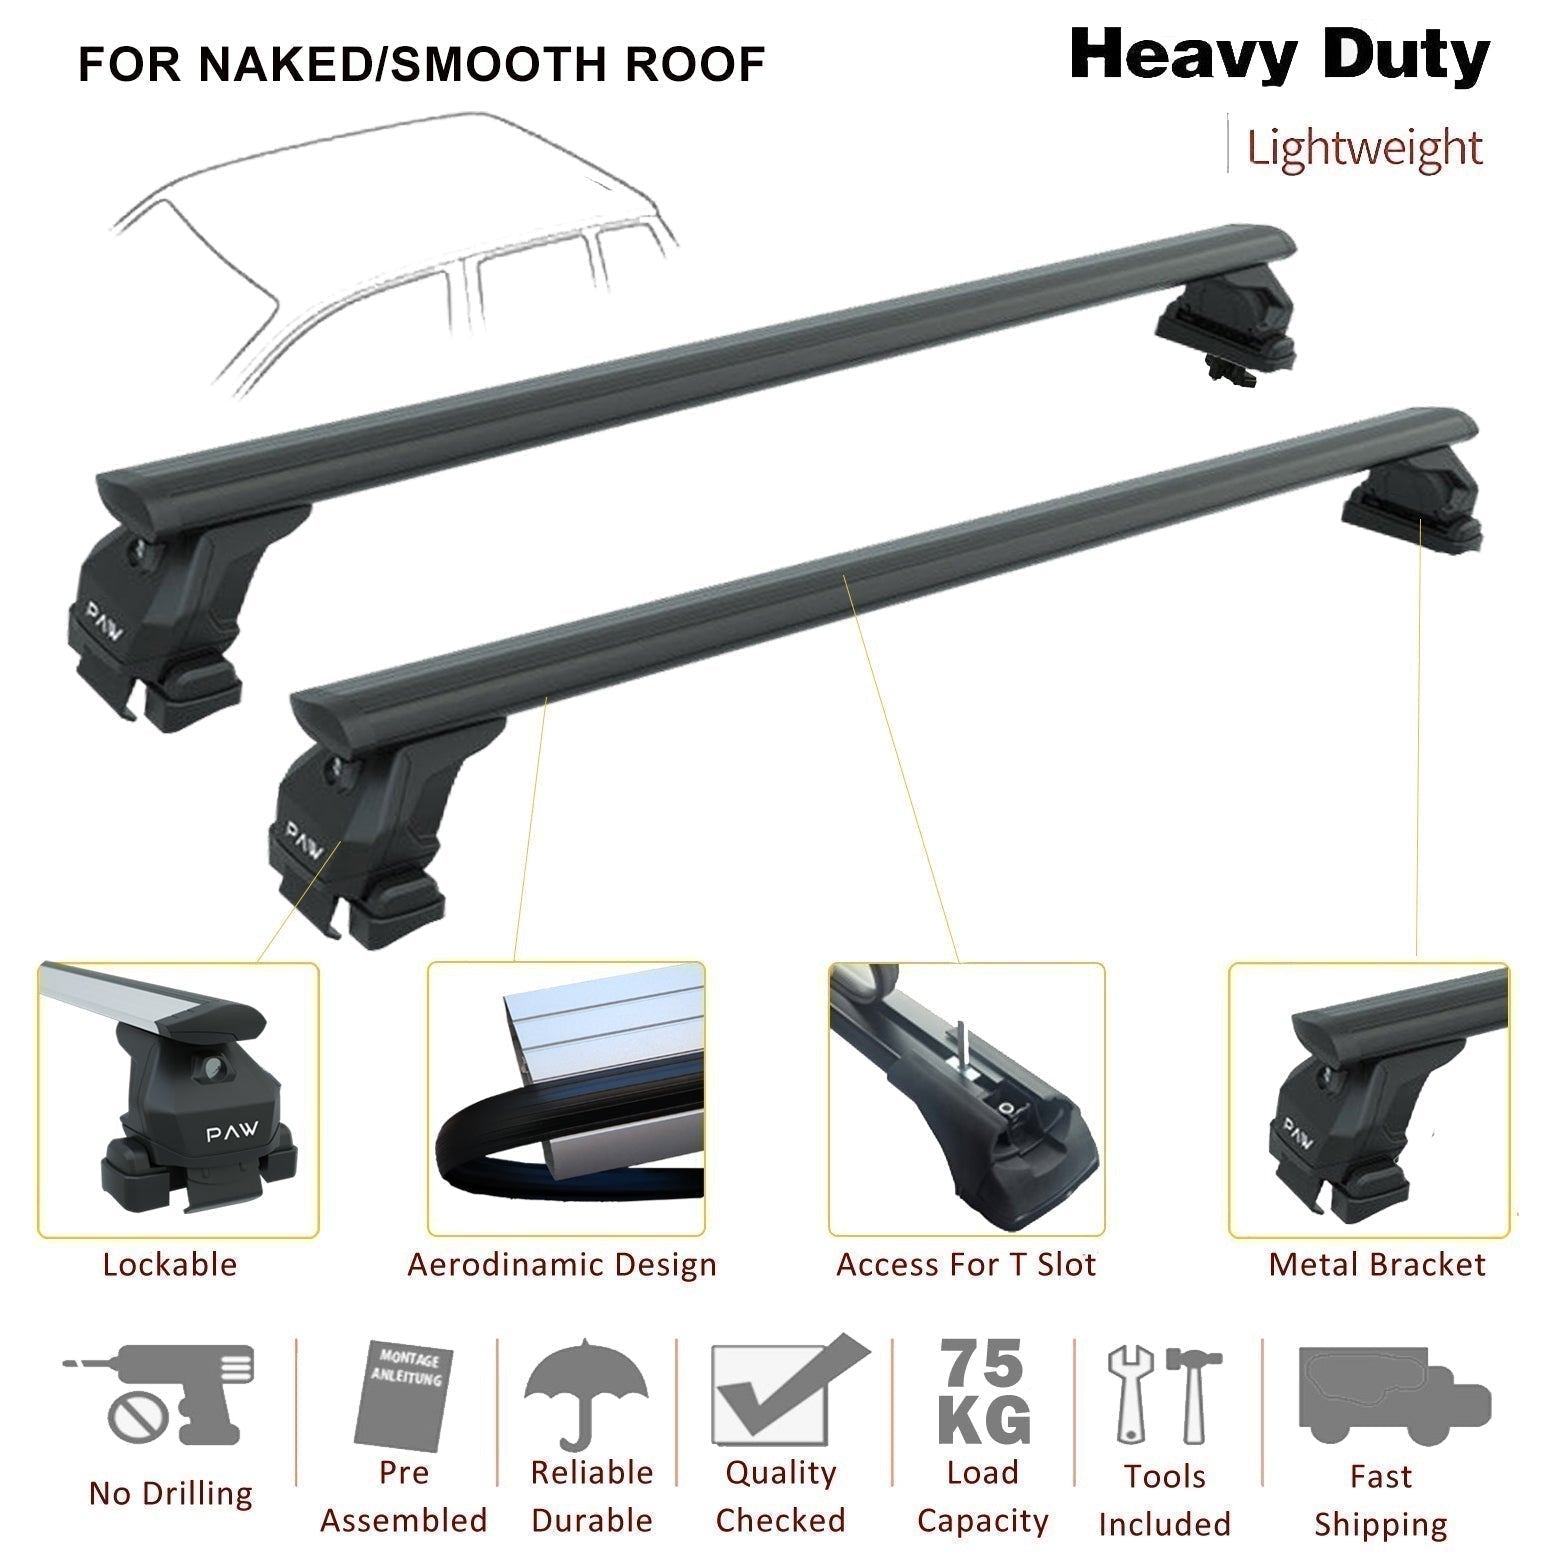 For Renault Kadjar 2015-Up Roof Rack System, Aluminium Cross Bar, Metal Bracket, Normal Roof, Silver